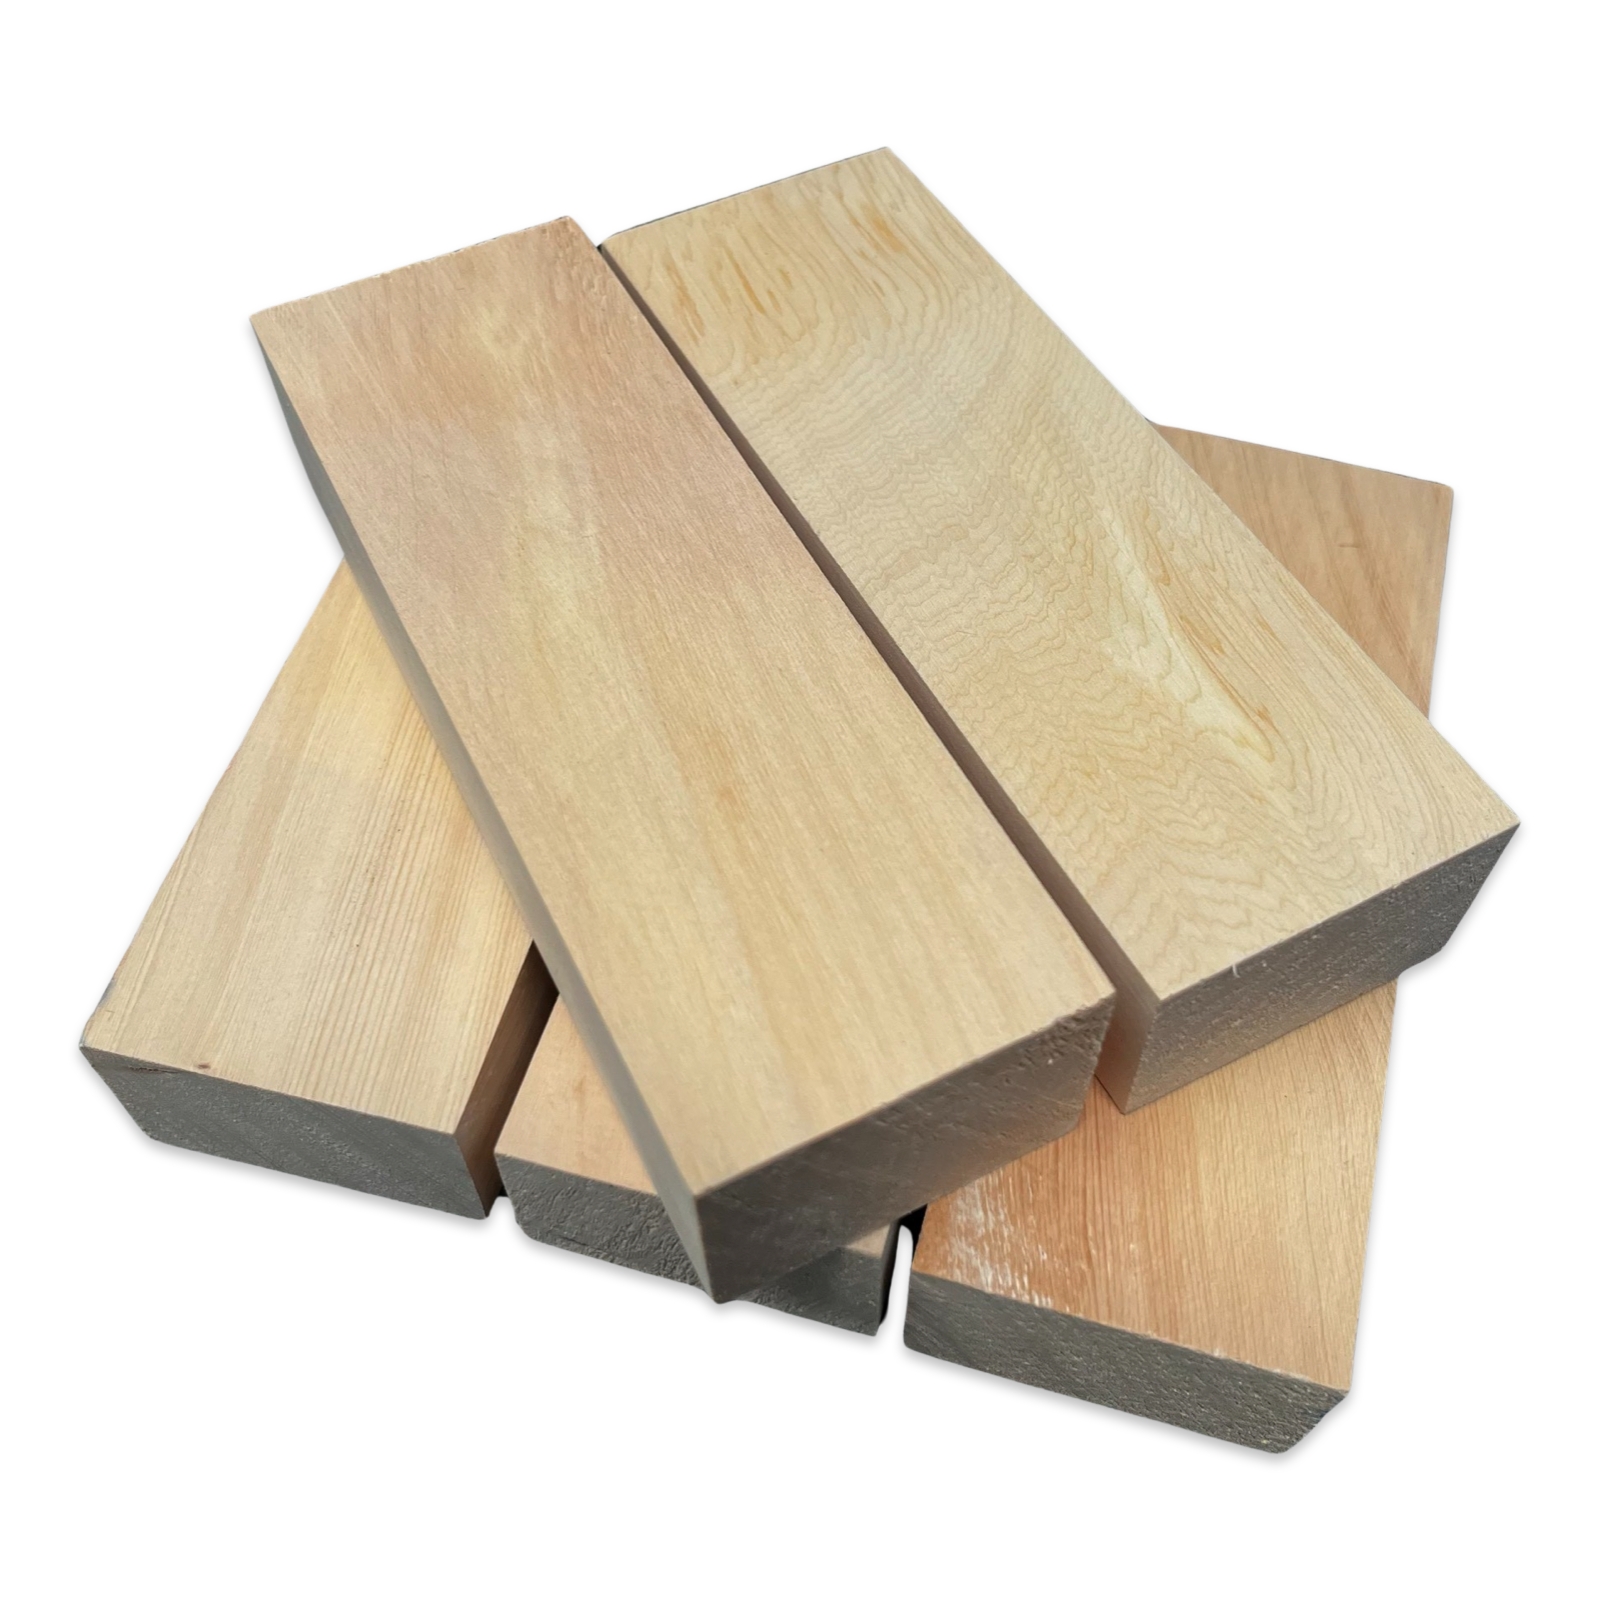 Huon Pine Blocks & Scales